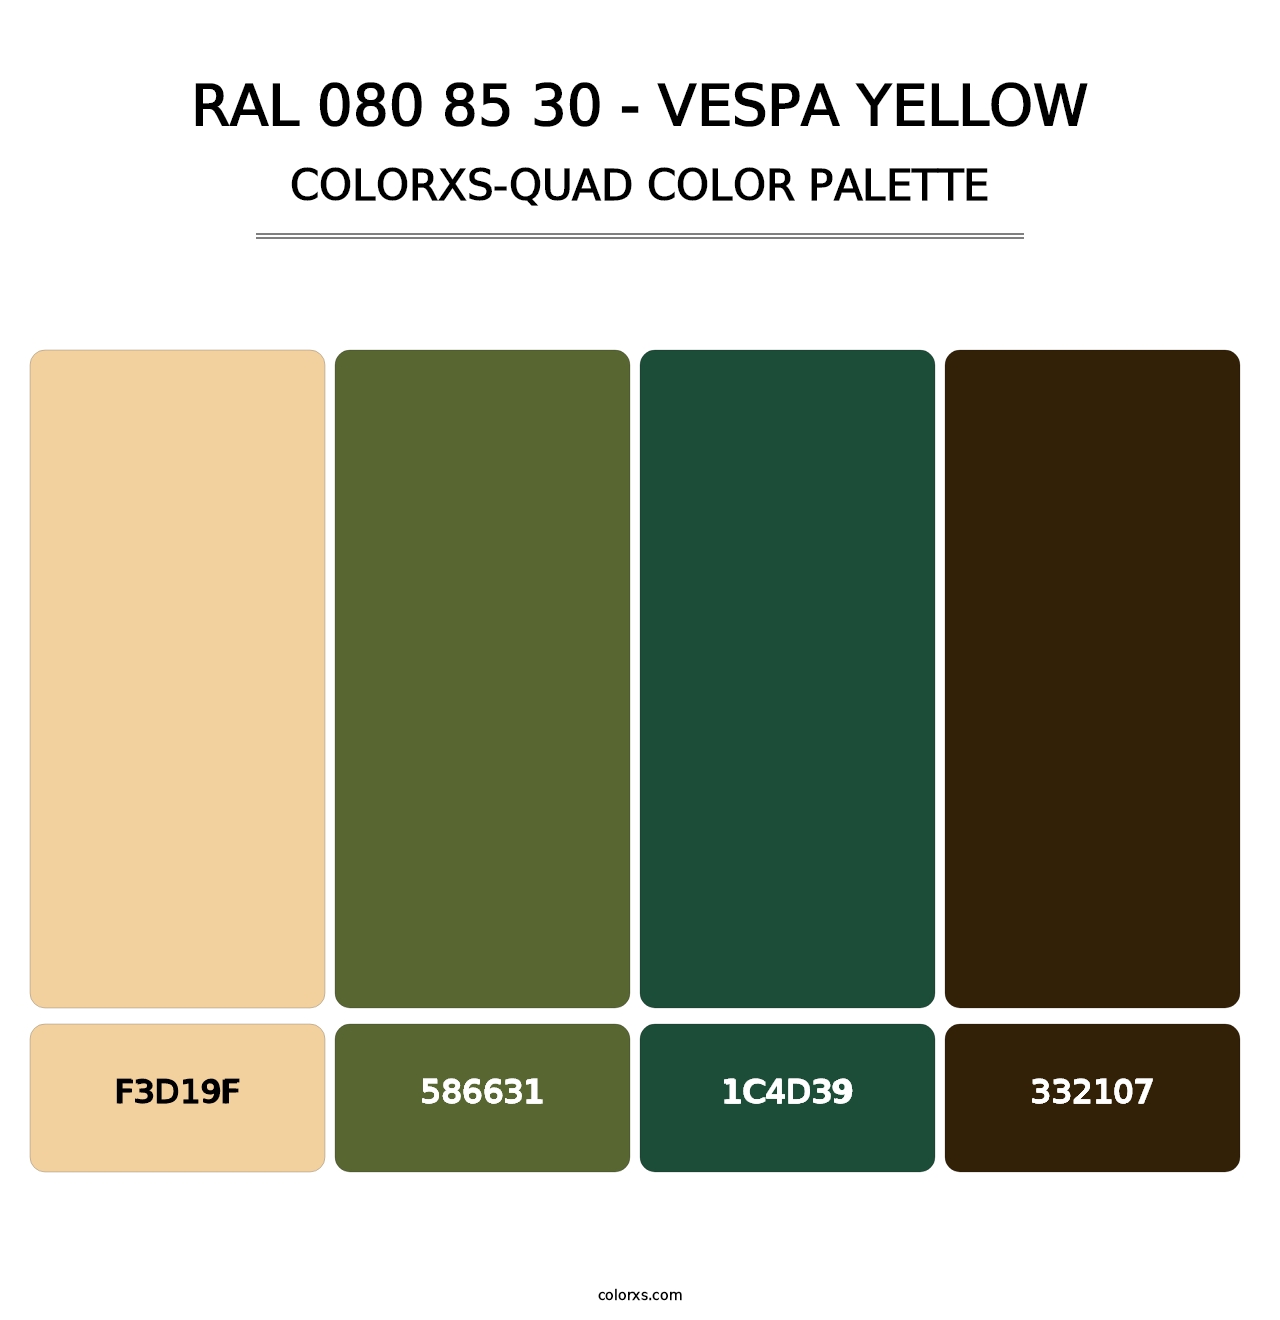 RAL 080 85 30 - Vespa Yellow - Colorxs Quad Palette